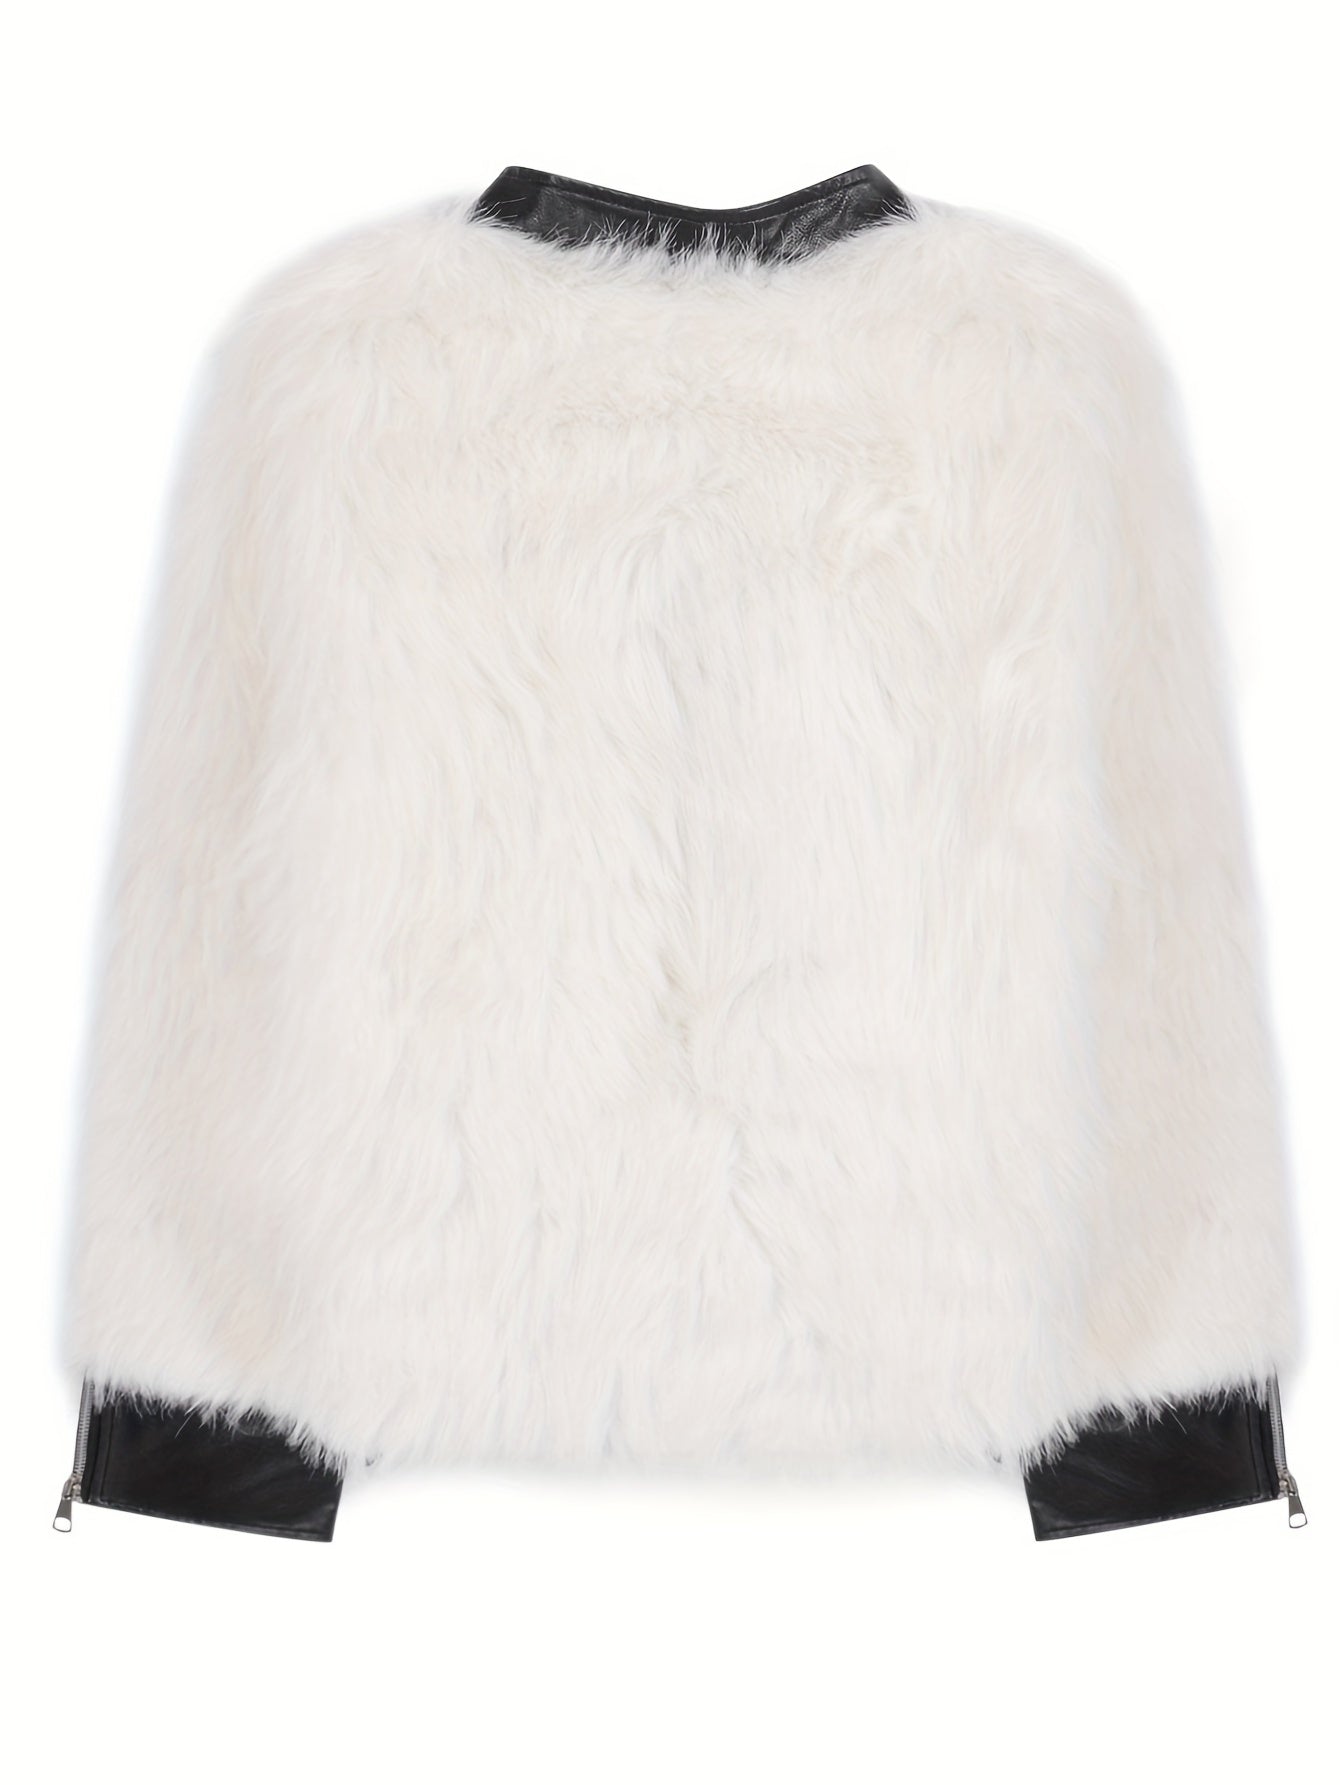 Faux Fur Zip-up Pocket Jacket, Stylish Long Sleeve Coat For Fall & Winter, Women's Clothing